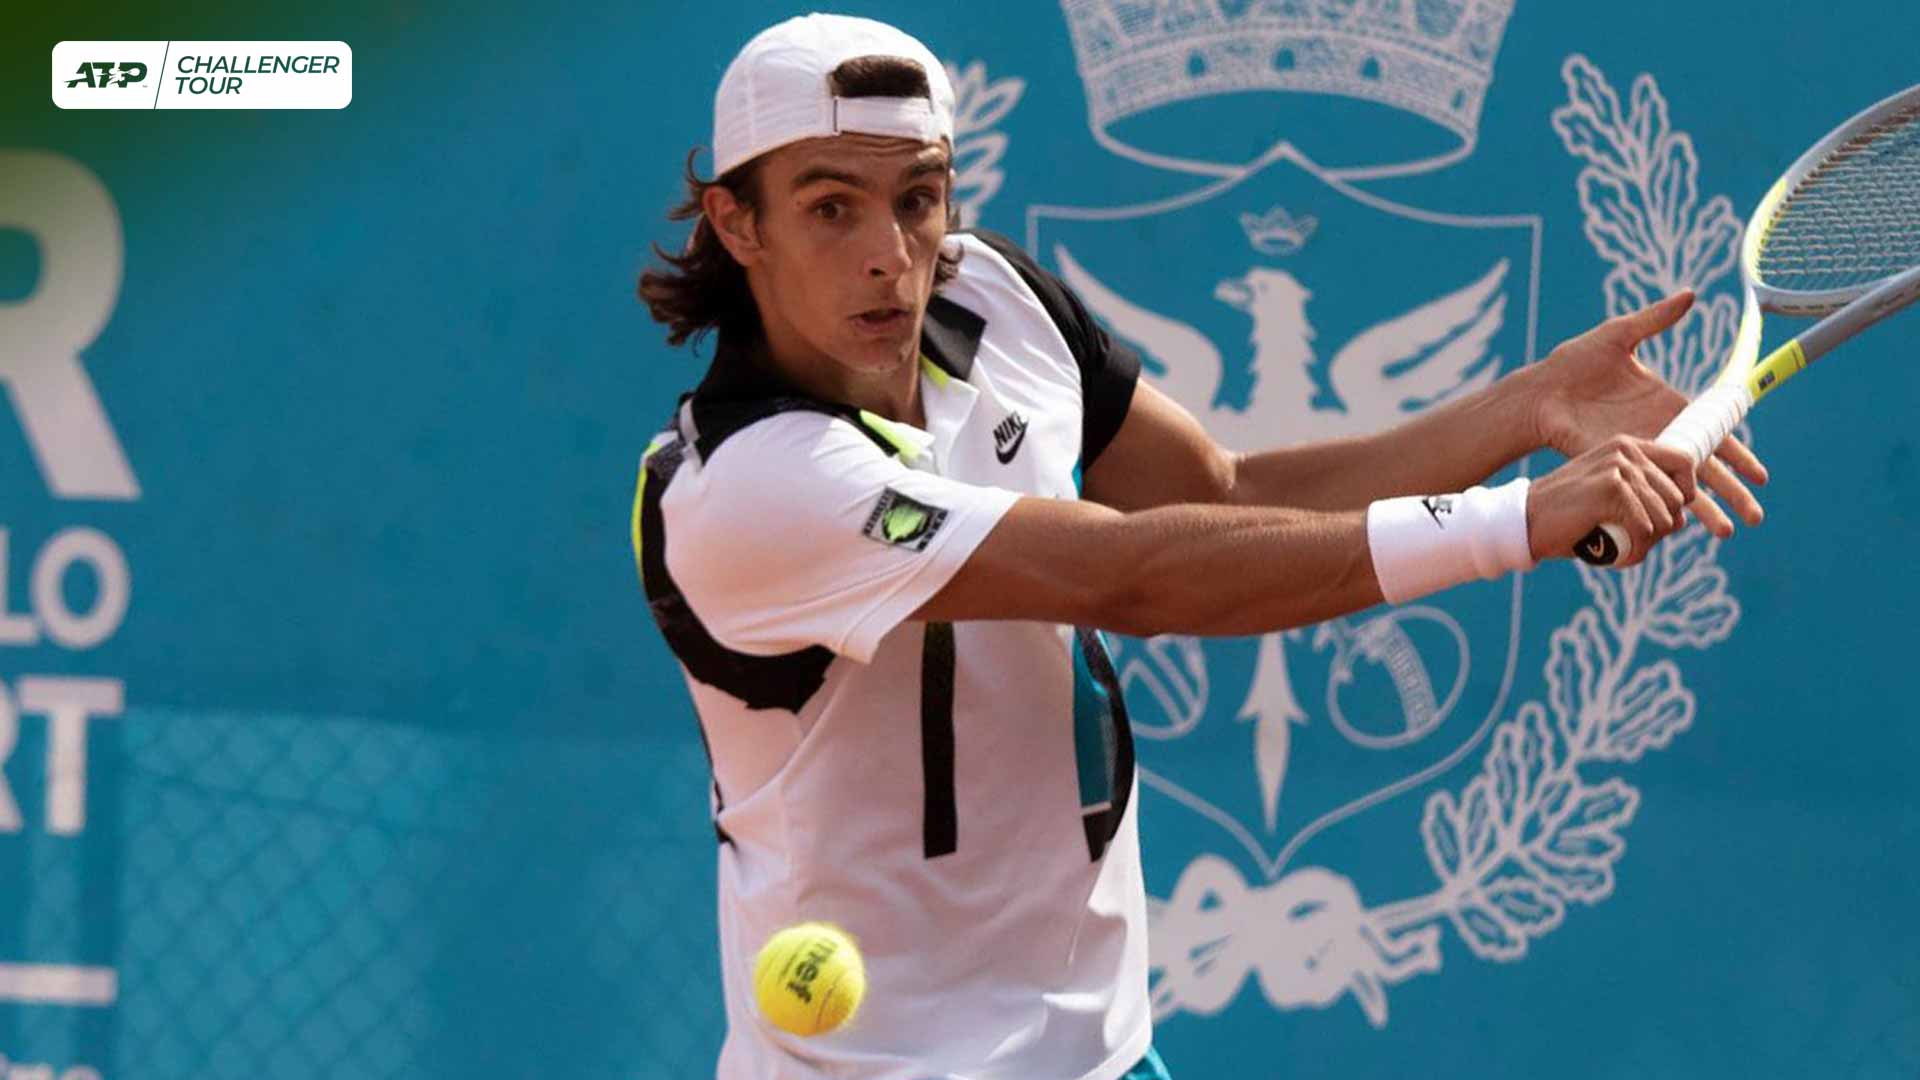 Lorenzo Musetti - The True Crown Prince of Tennis